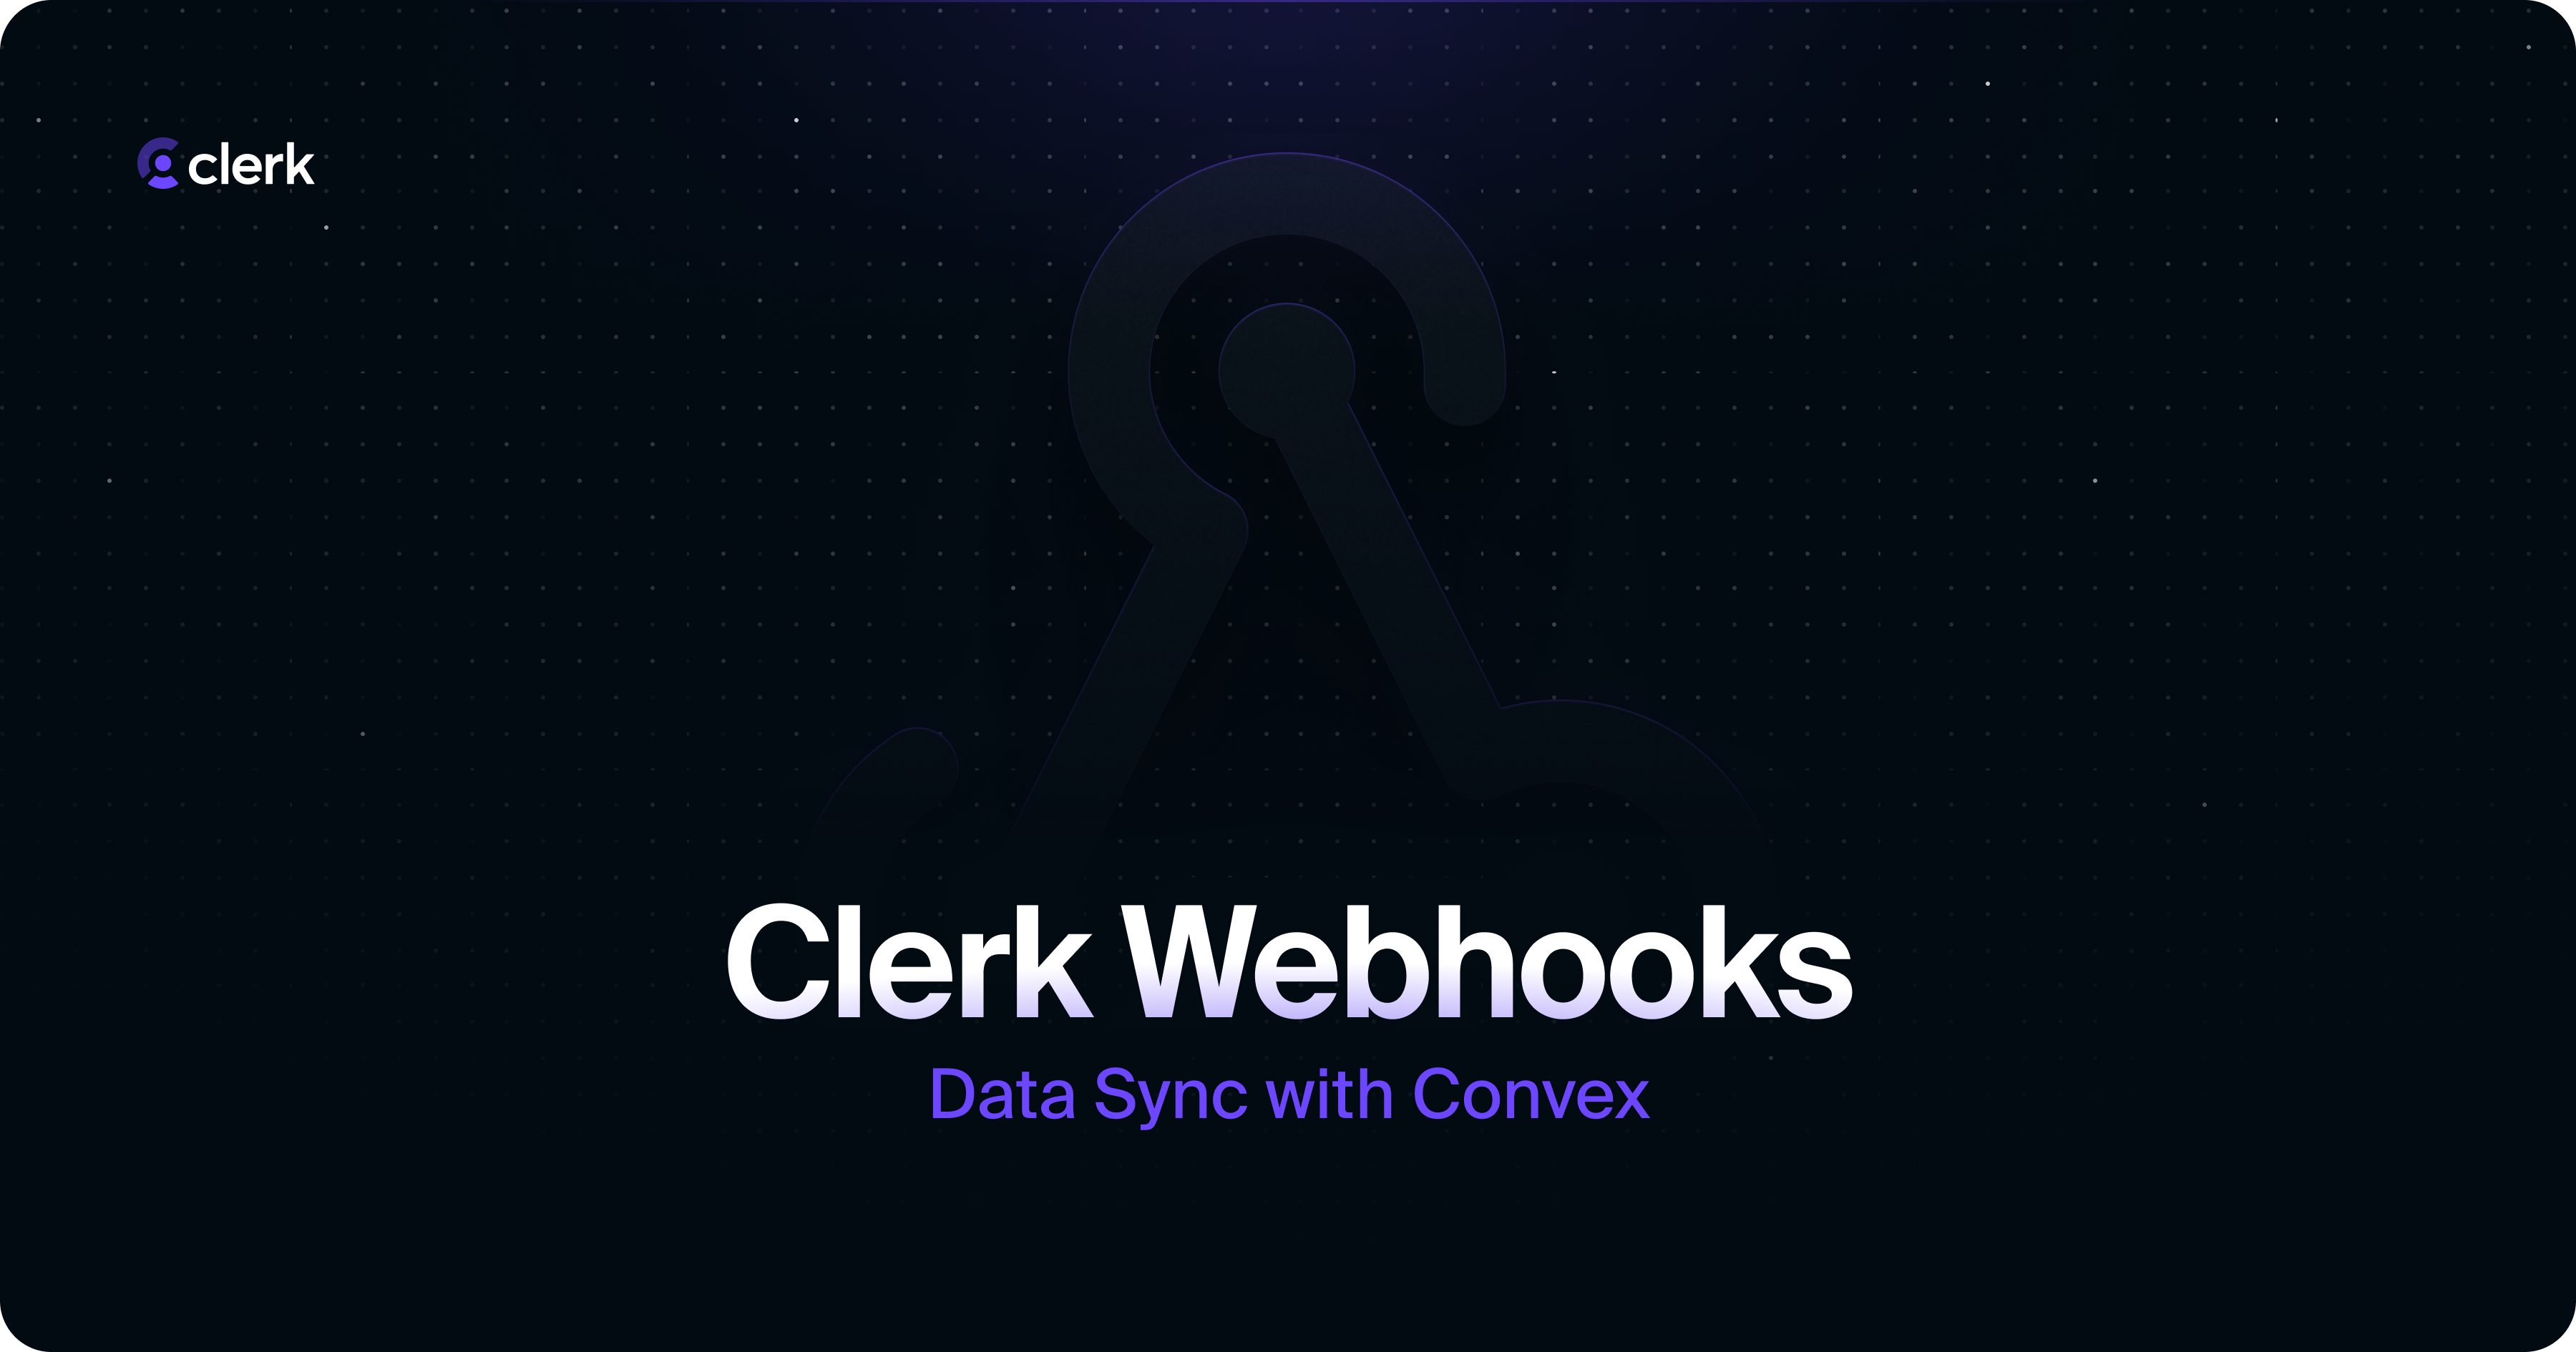 Clerk Webhooks: Data Sync with Convex